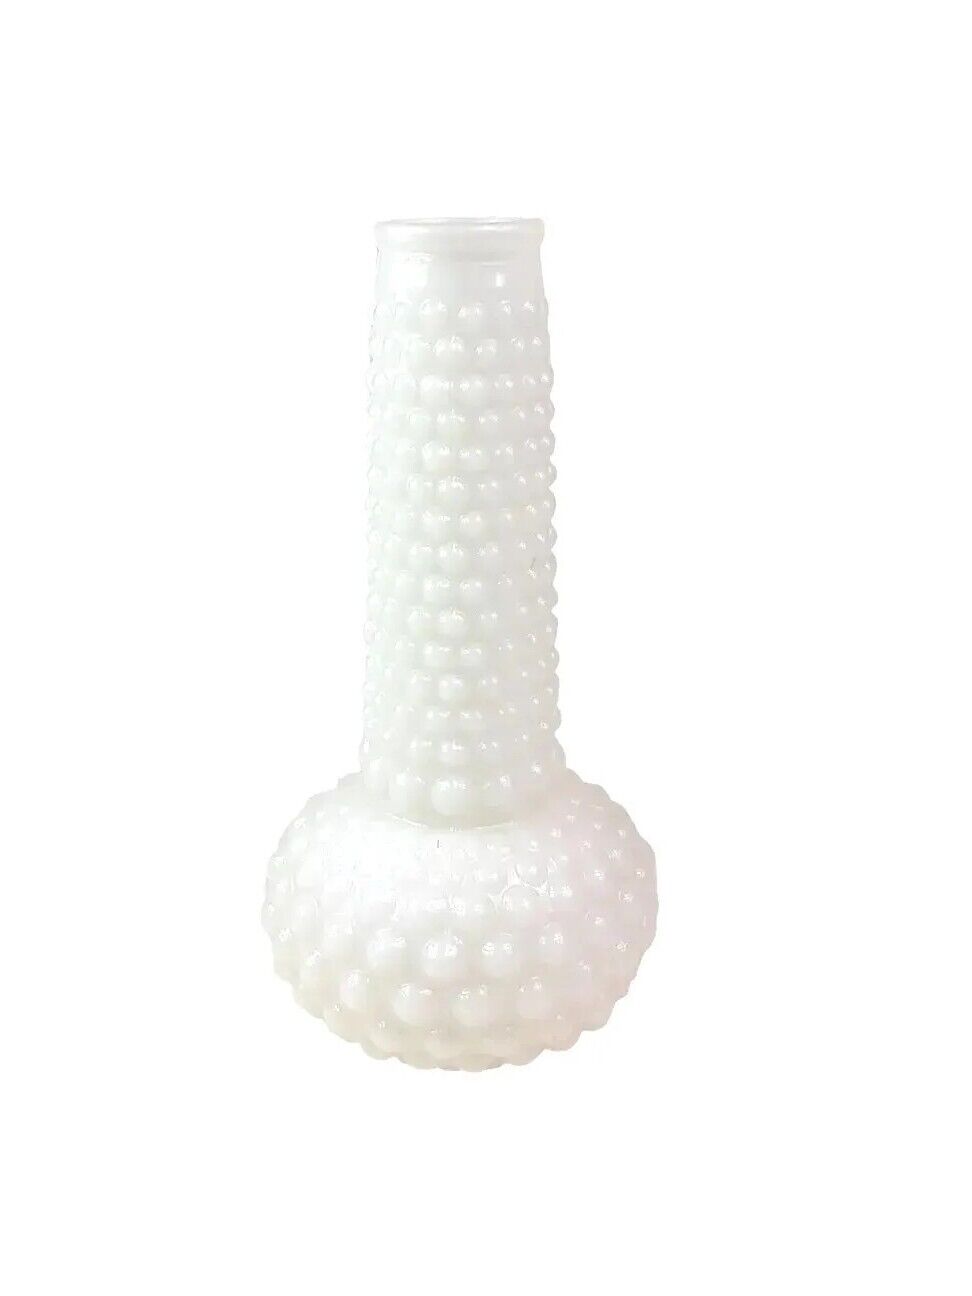 Vintage White Hobnail Vase Milk Glass Bud Vase Decorative Collectible 7\